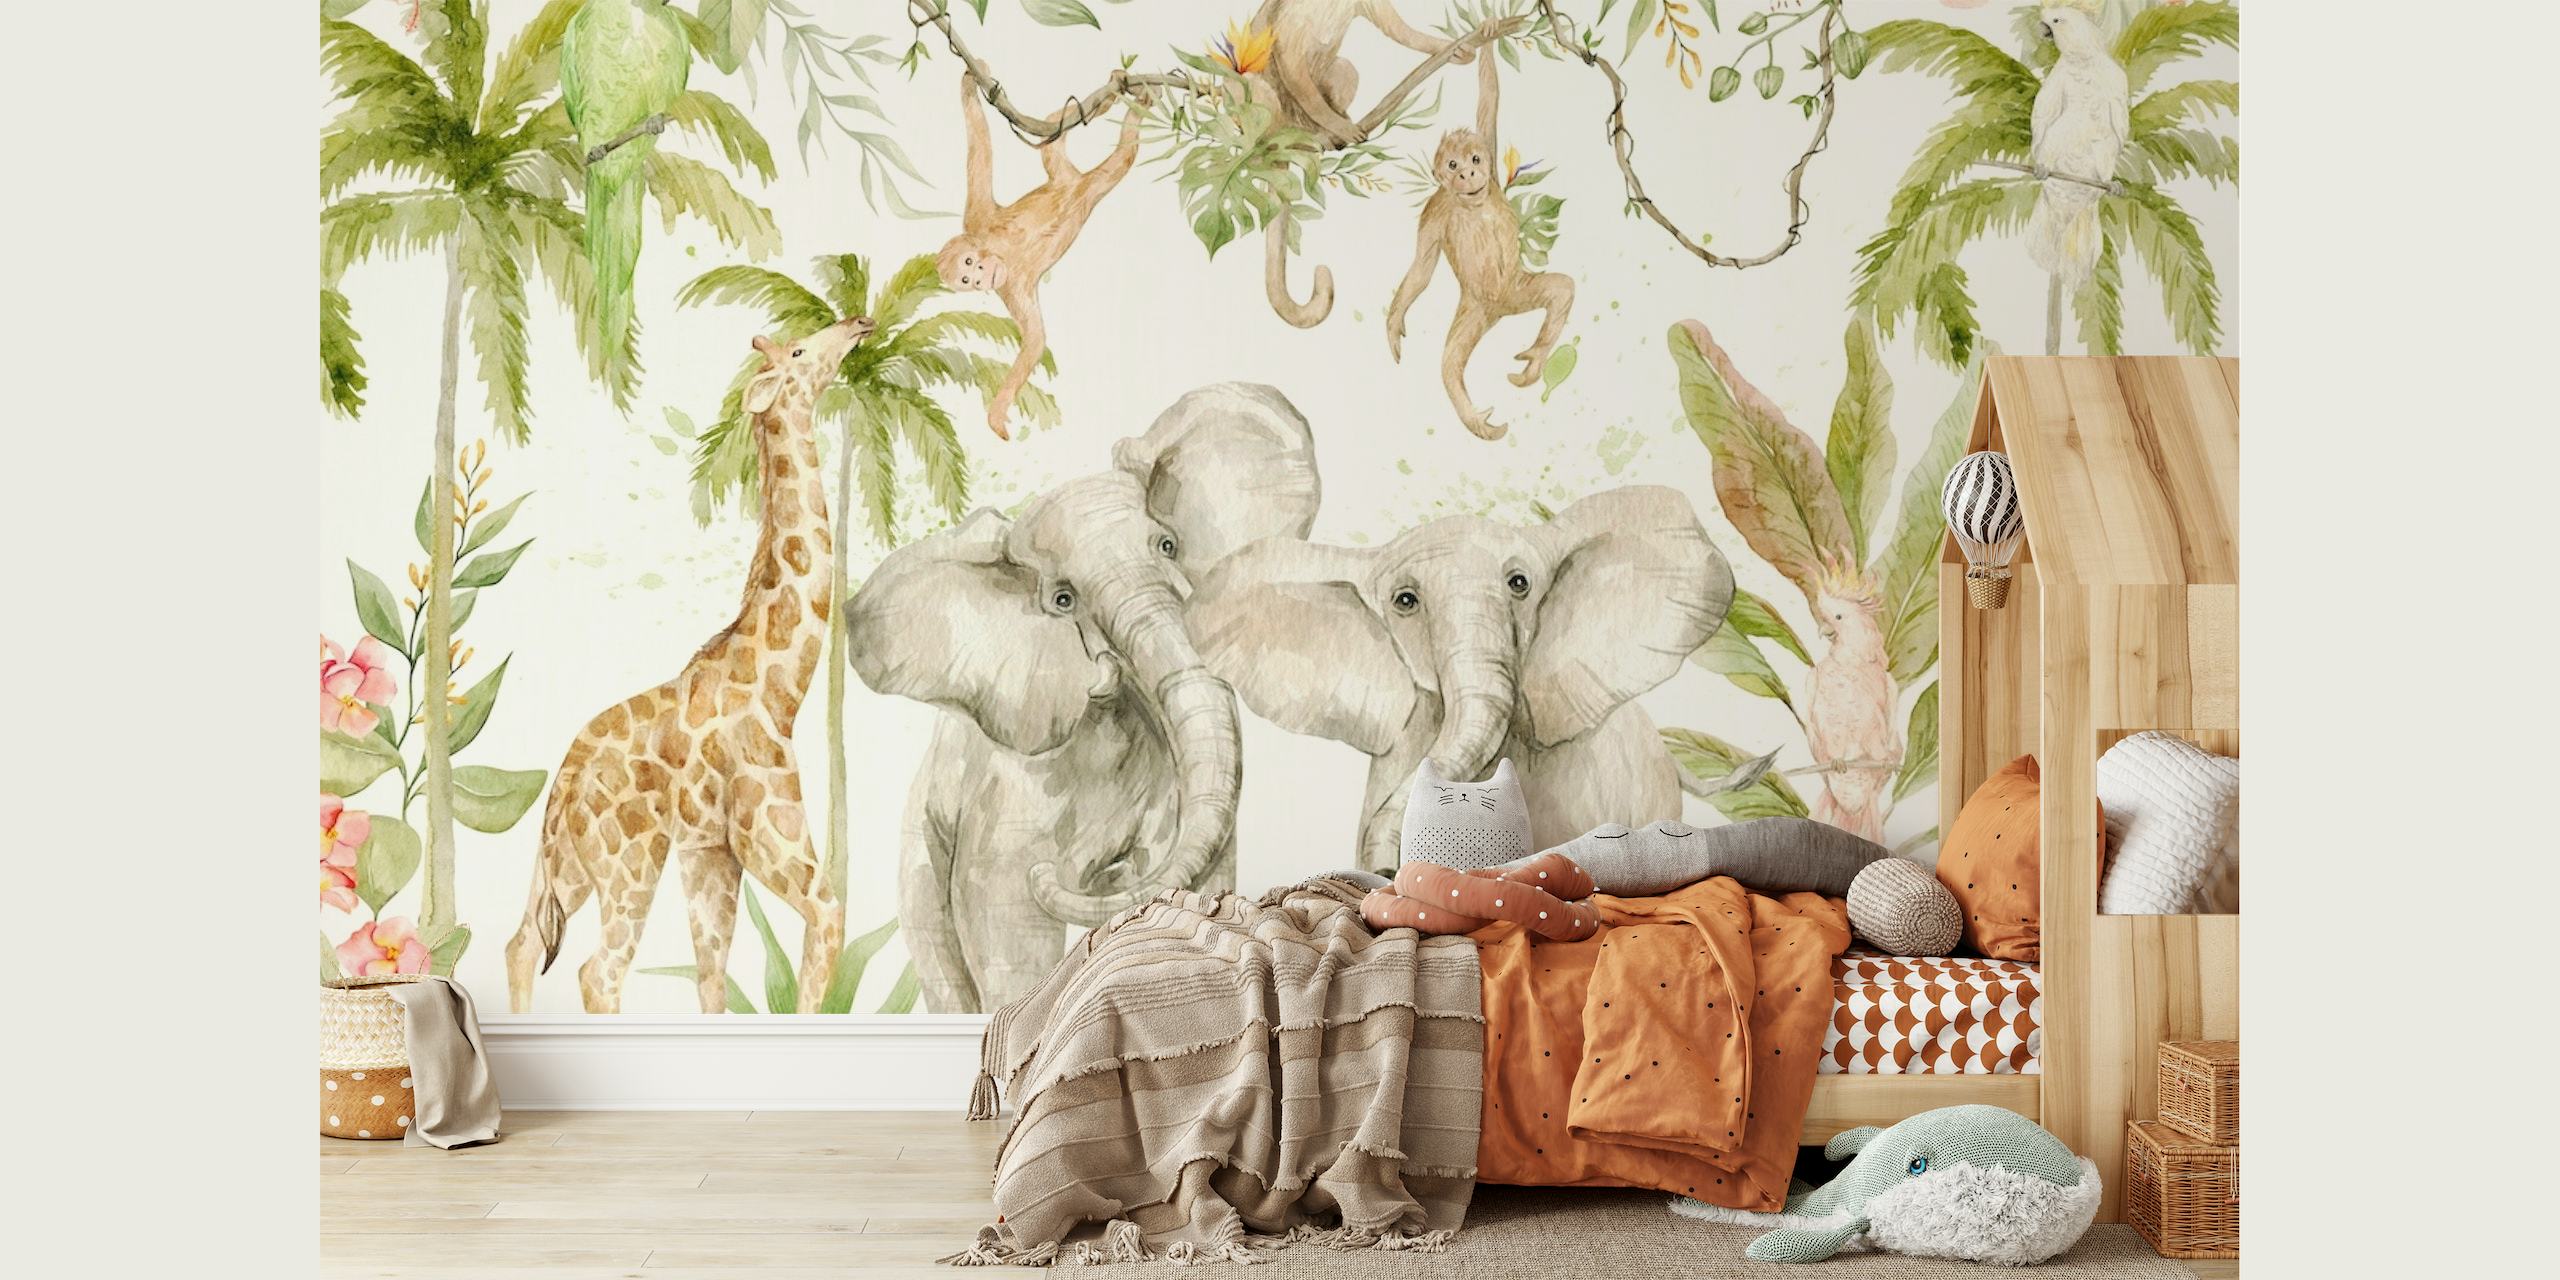 Håndmalet vægmaleri af en tropisk safari-junglescene med elefanter, giraffer og aber blandt grønne områder